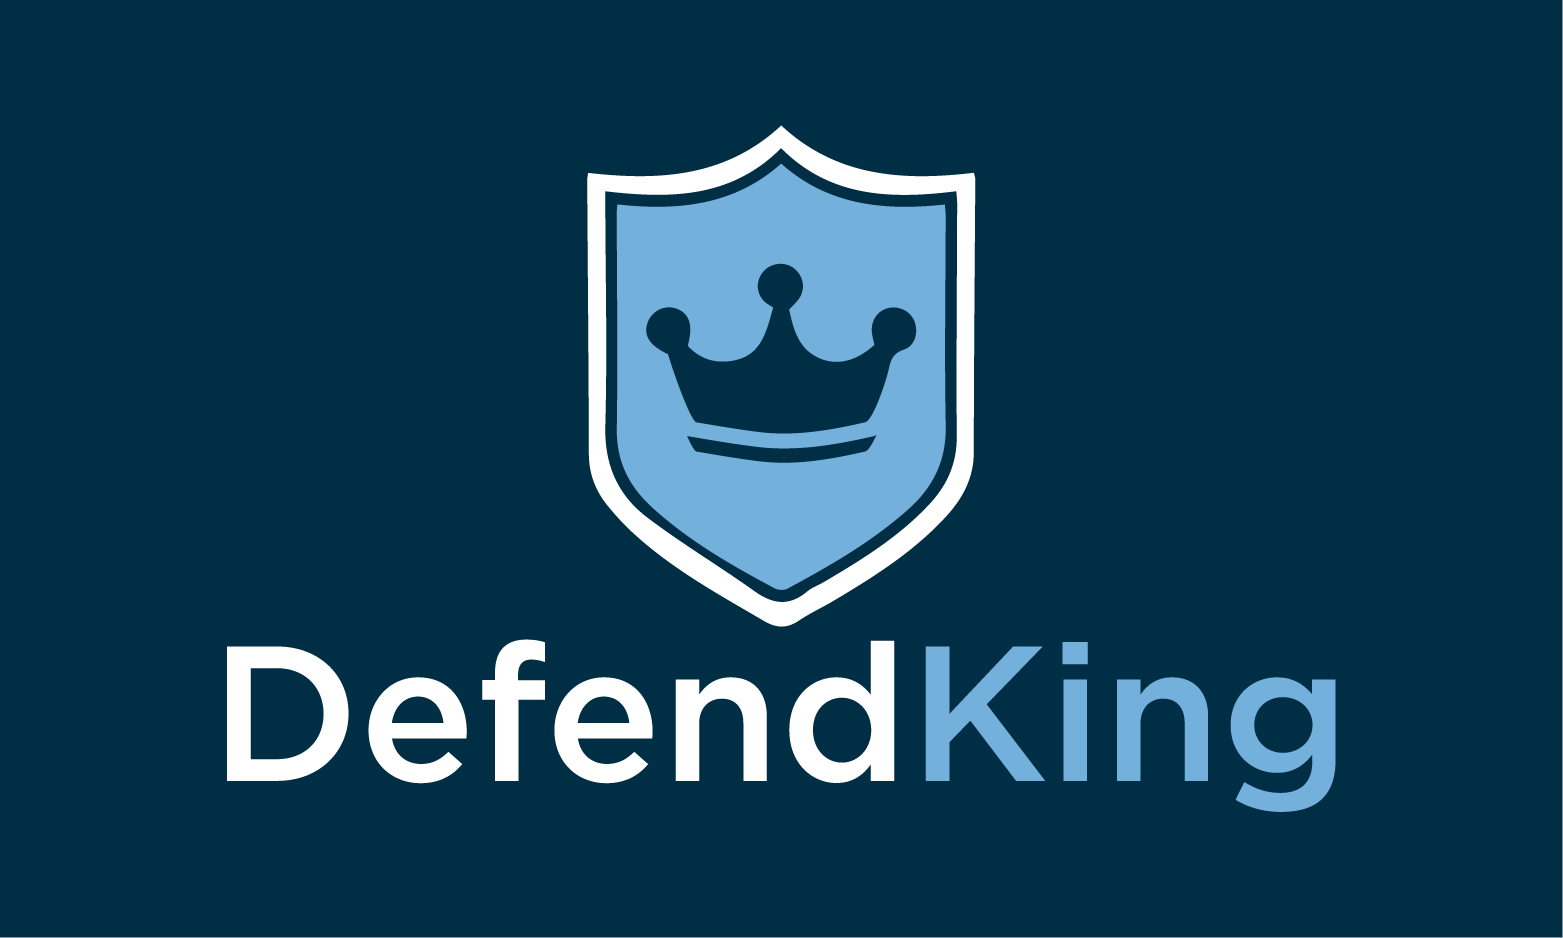 DefendKing.com - Creative brandable domain for sale